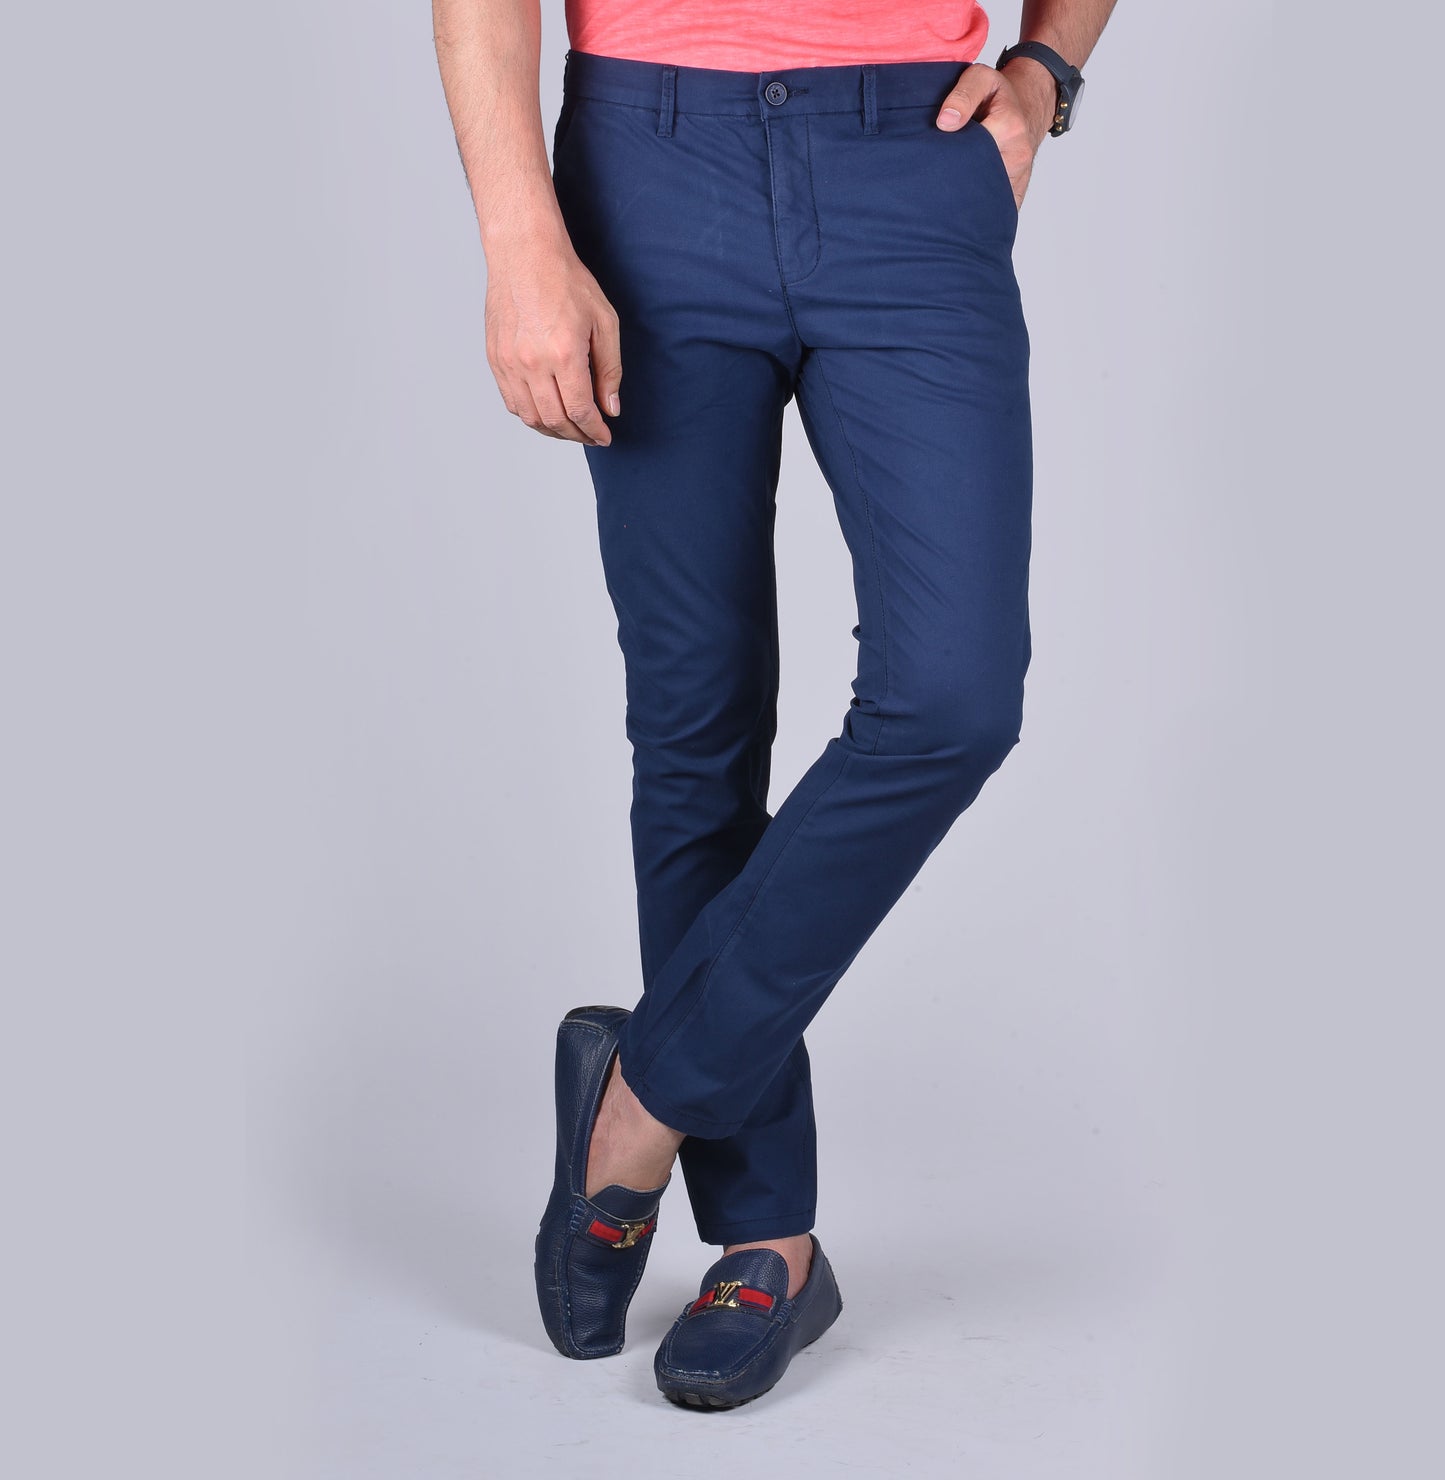 Blue contour fit trousers. - urban clothing co.